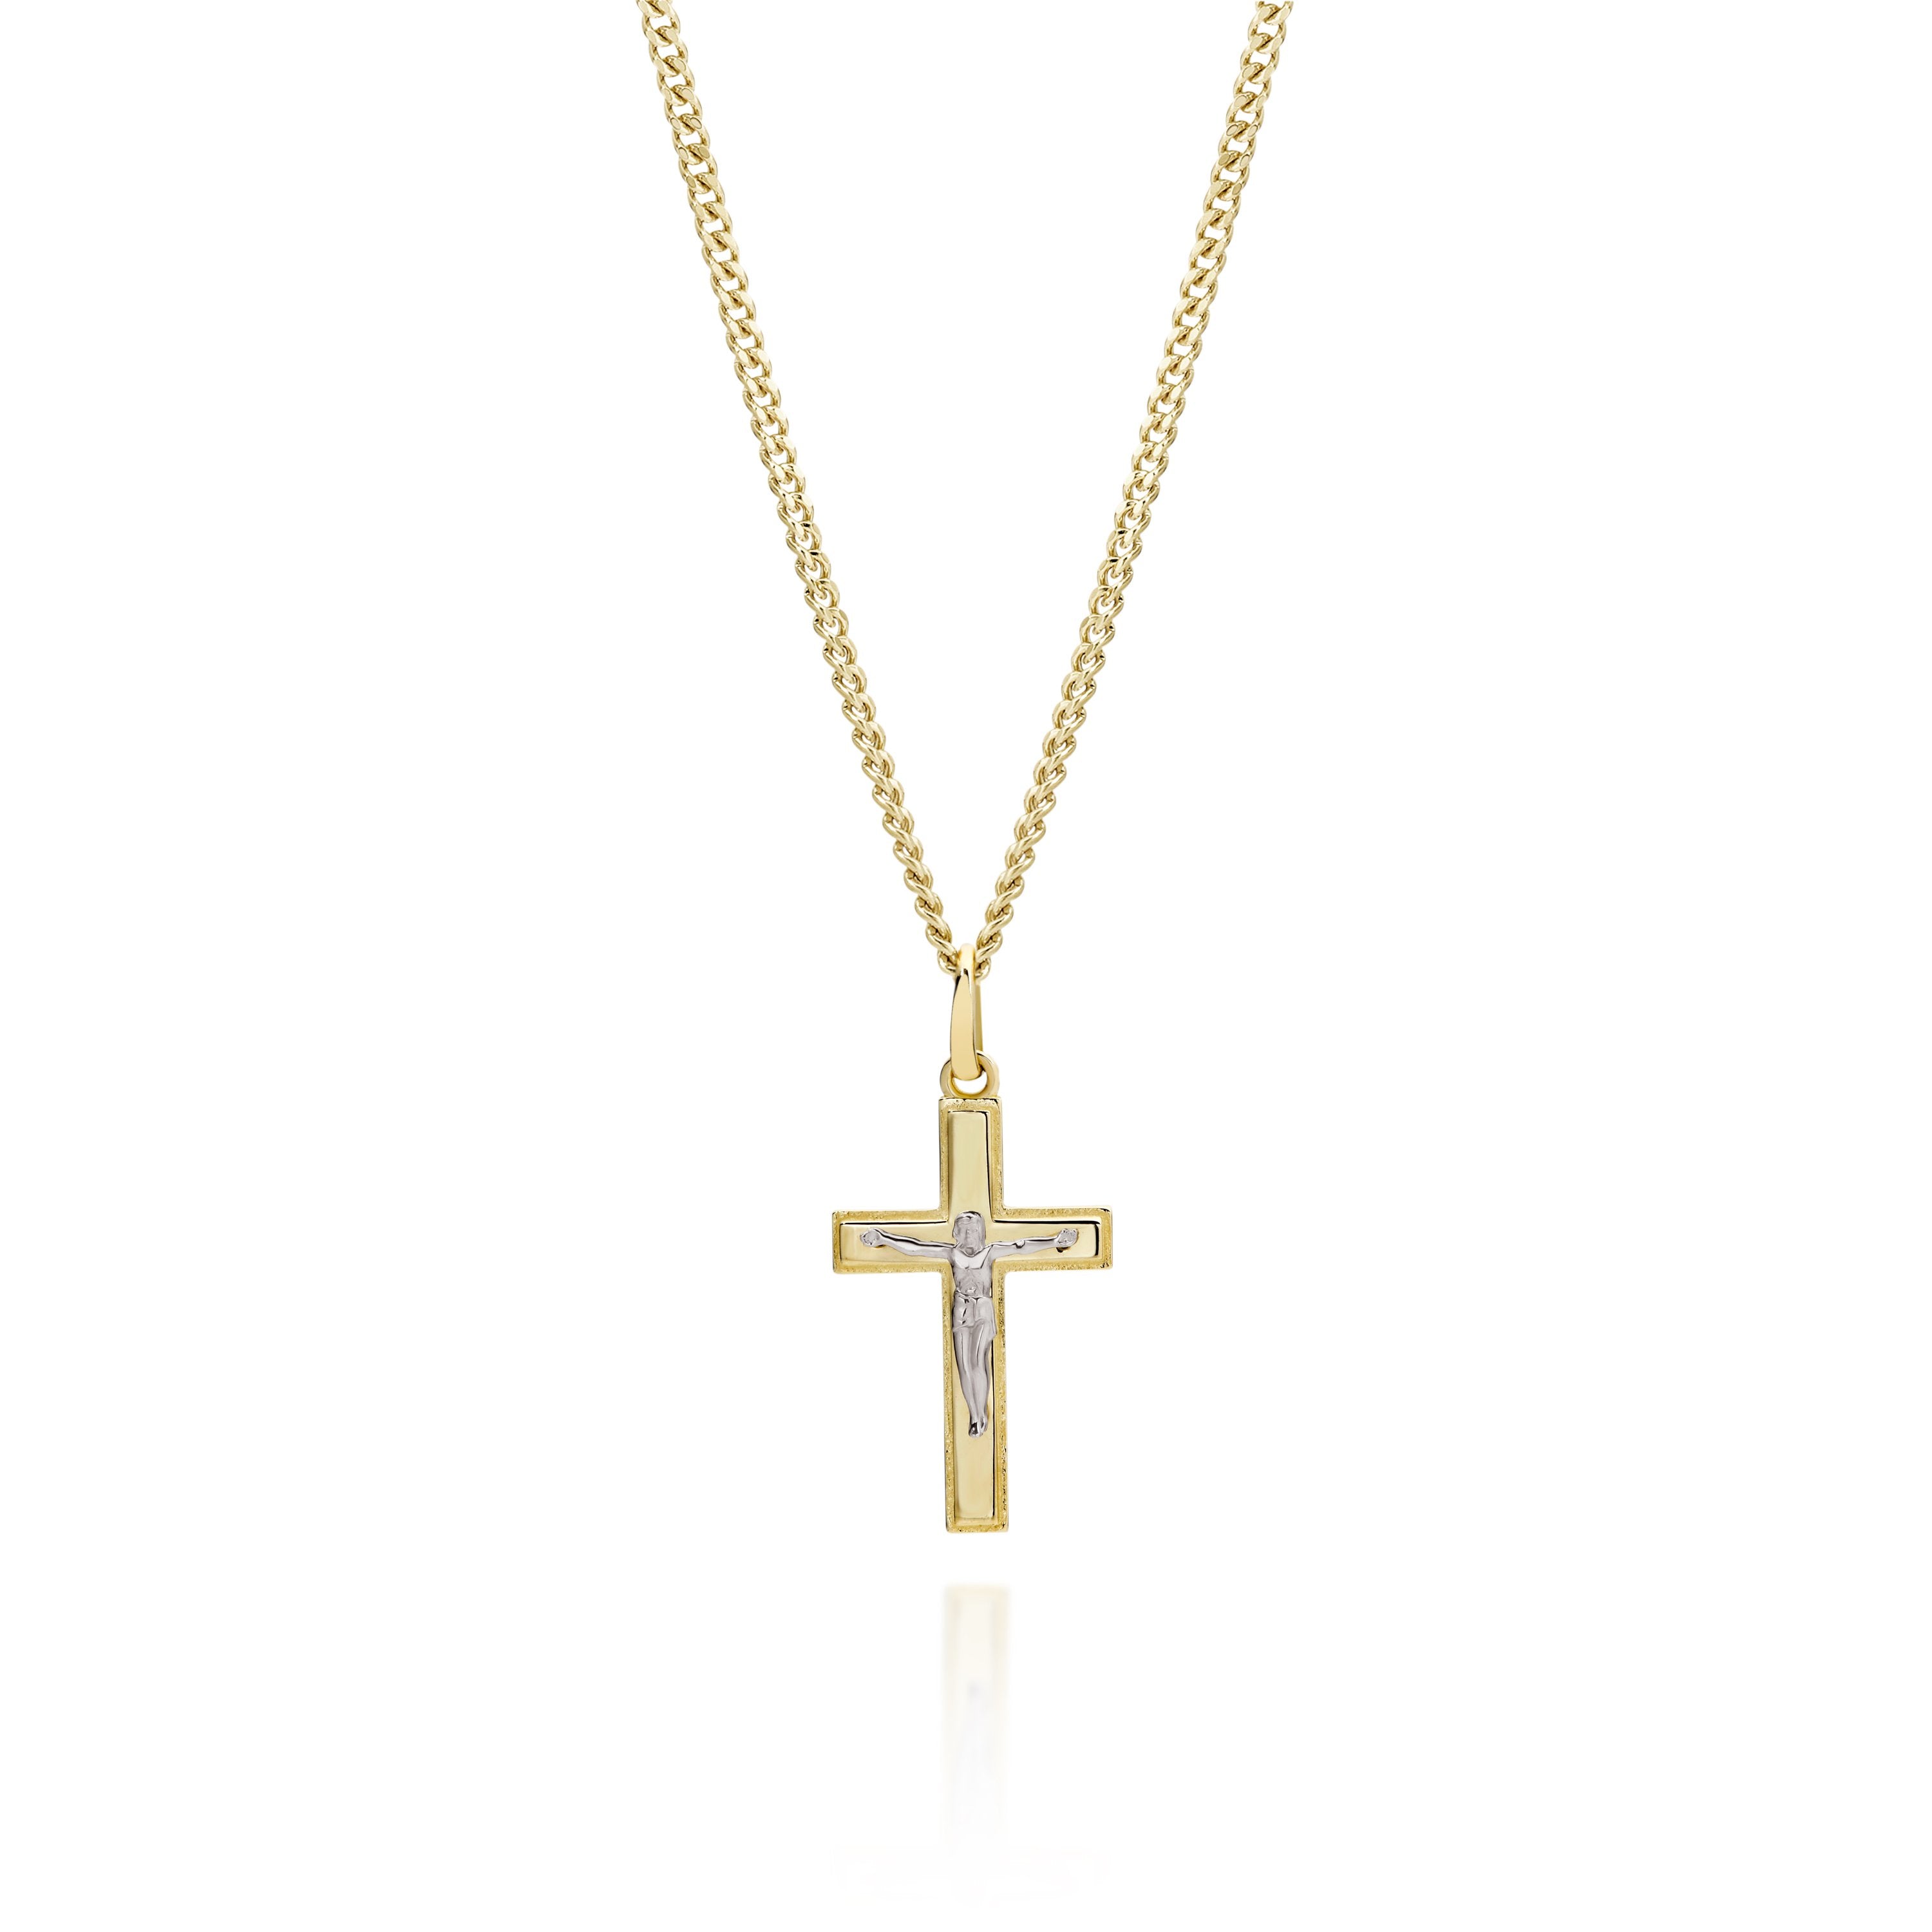 9ct gold 2 tone crucifix pendant